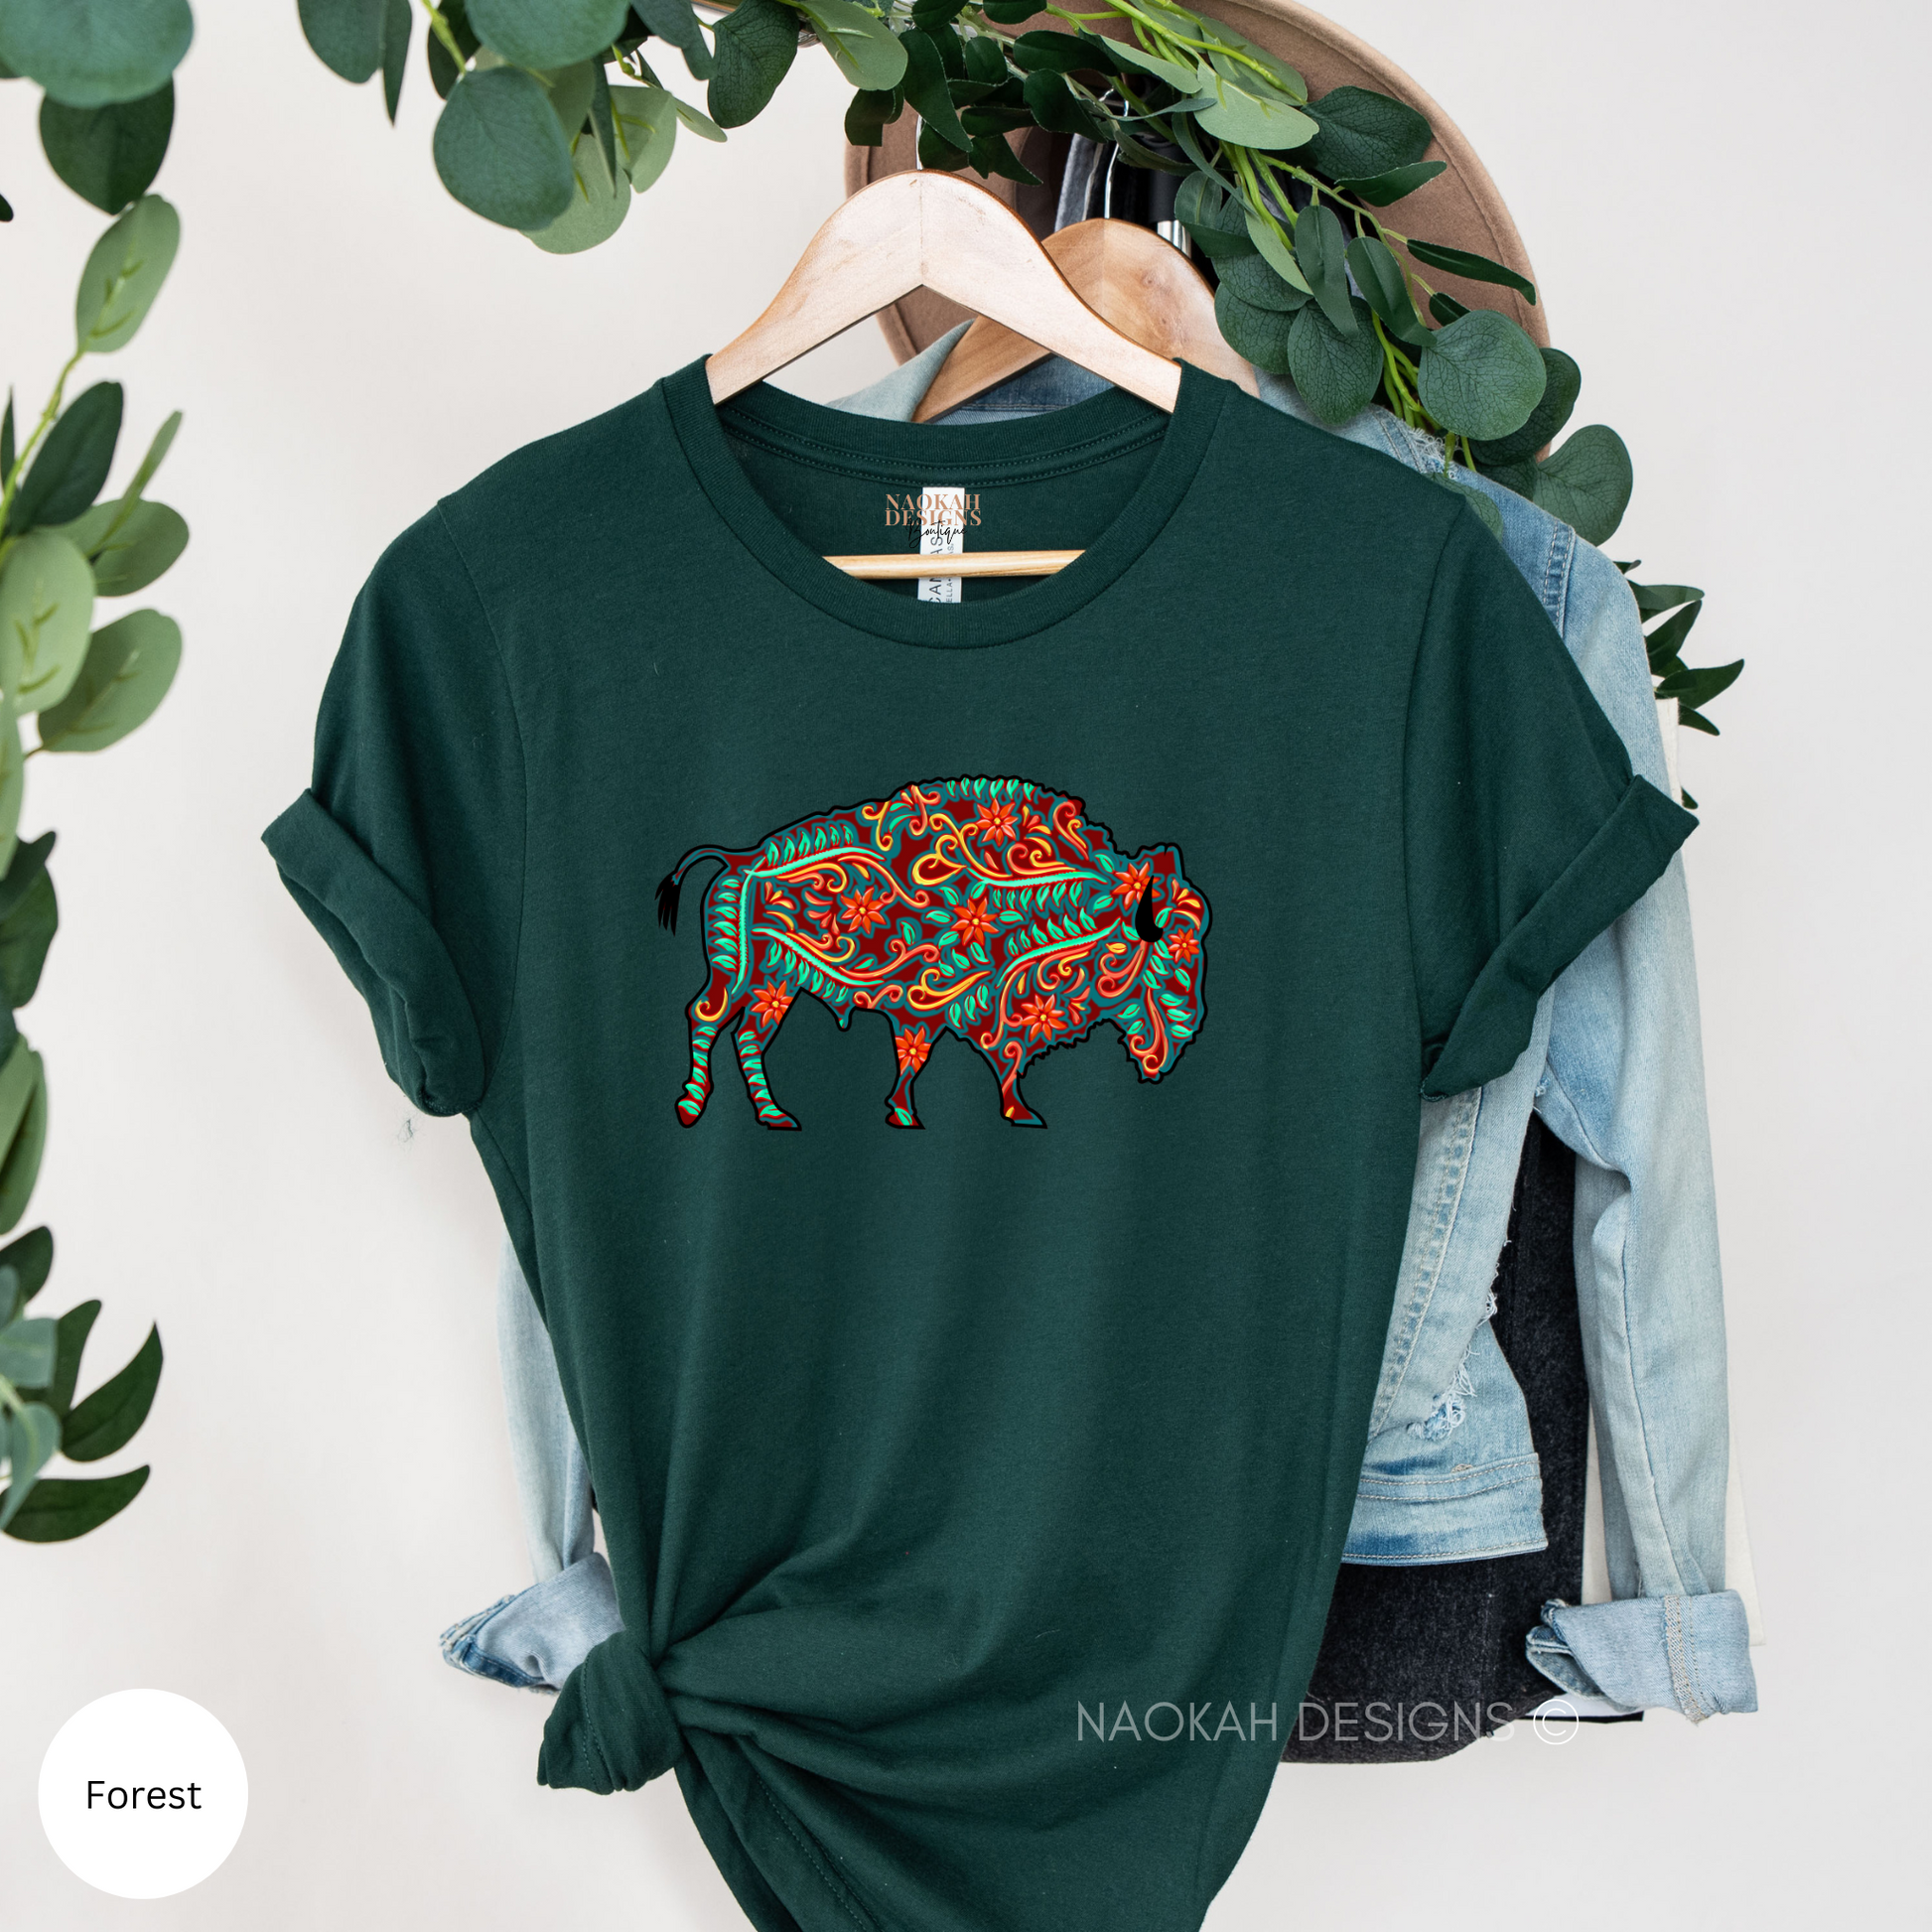 Buffalo Floral Turquoise Shirt, Indigenous bison shirt, Native buffalo shirt, native beaded design, Indigenous beaded png, Indigenous shirt, tribal shirt, aztec shirt, southwestern buffalo shirt